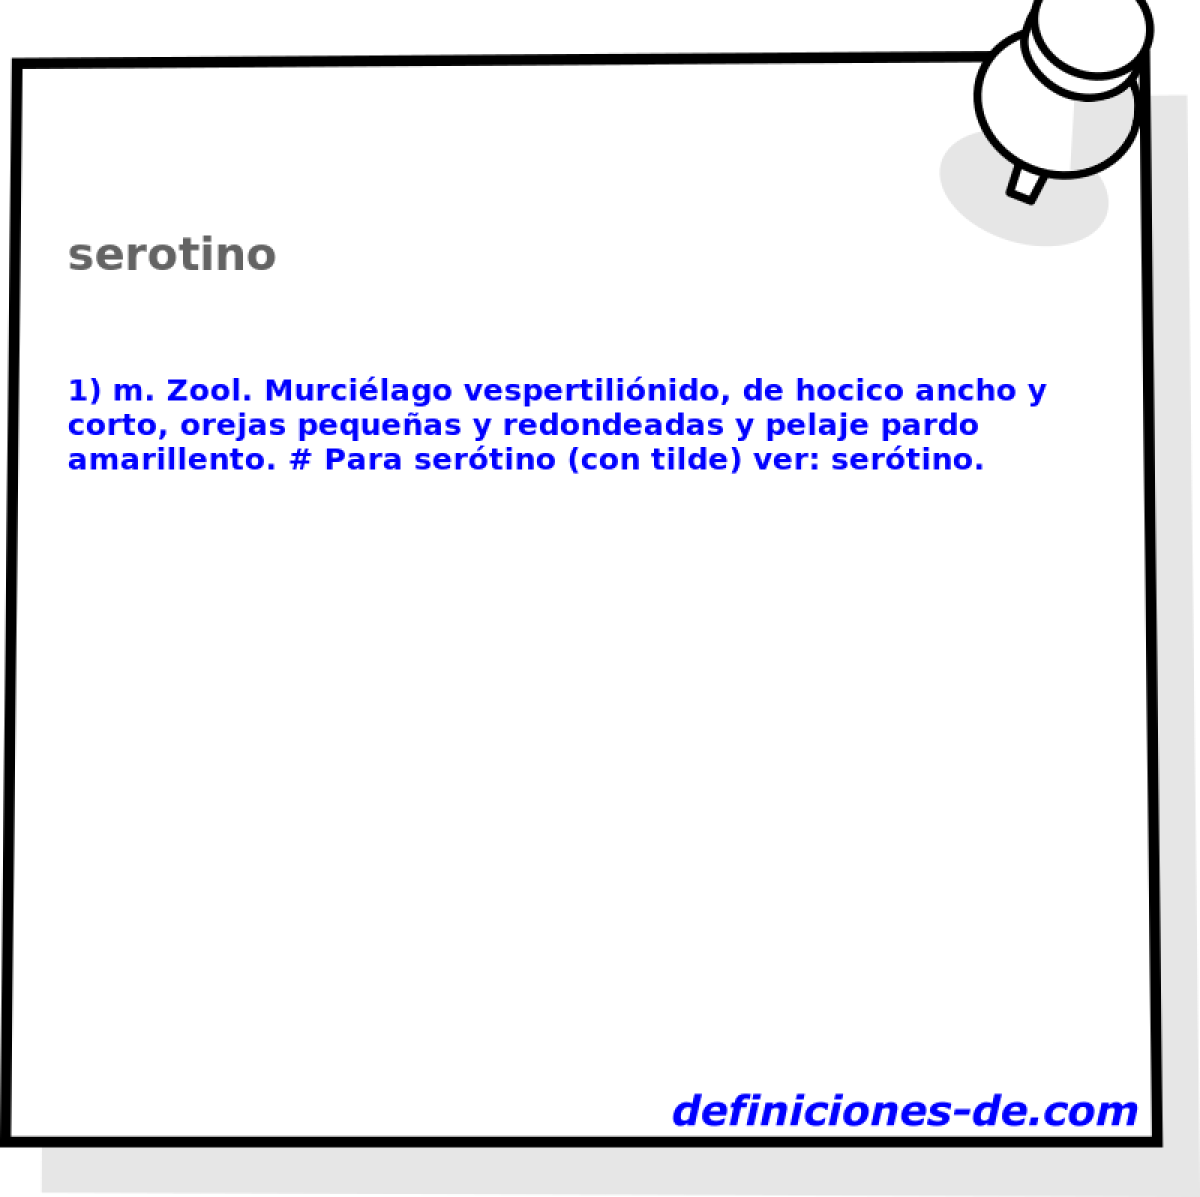 serotino 